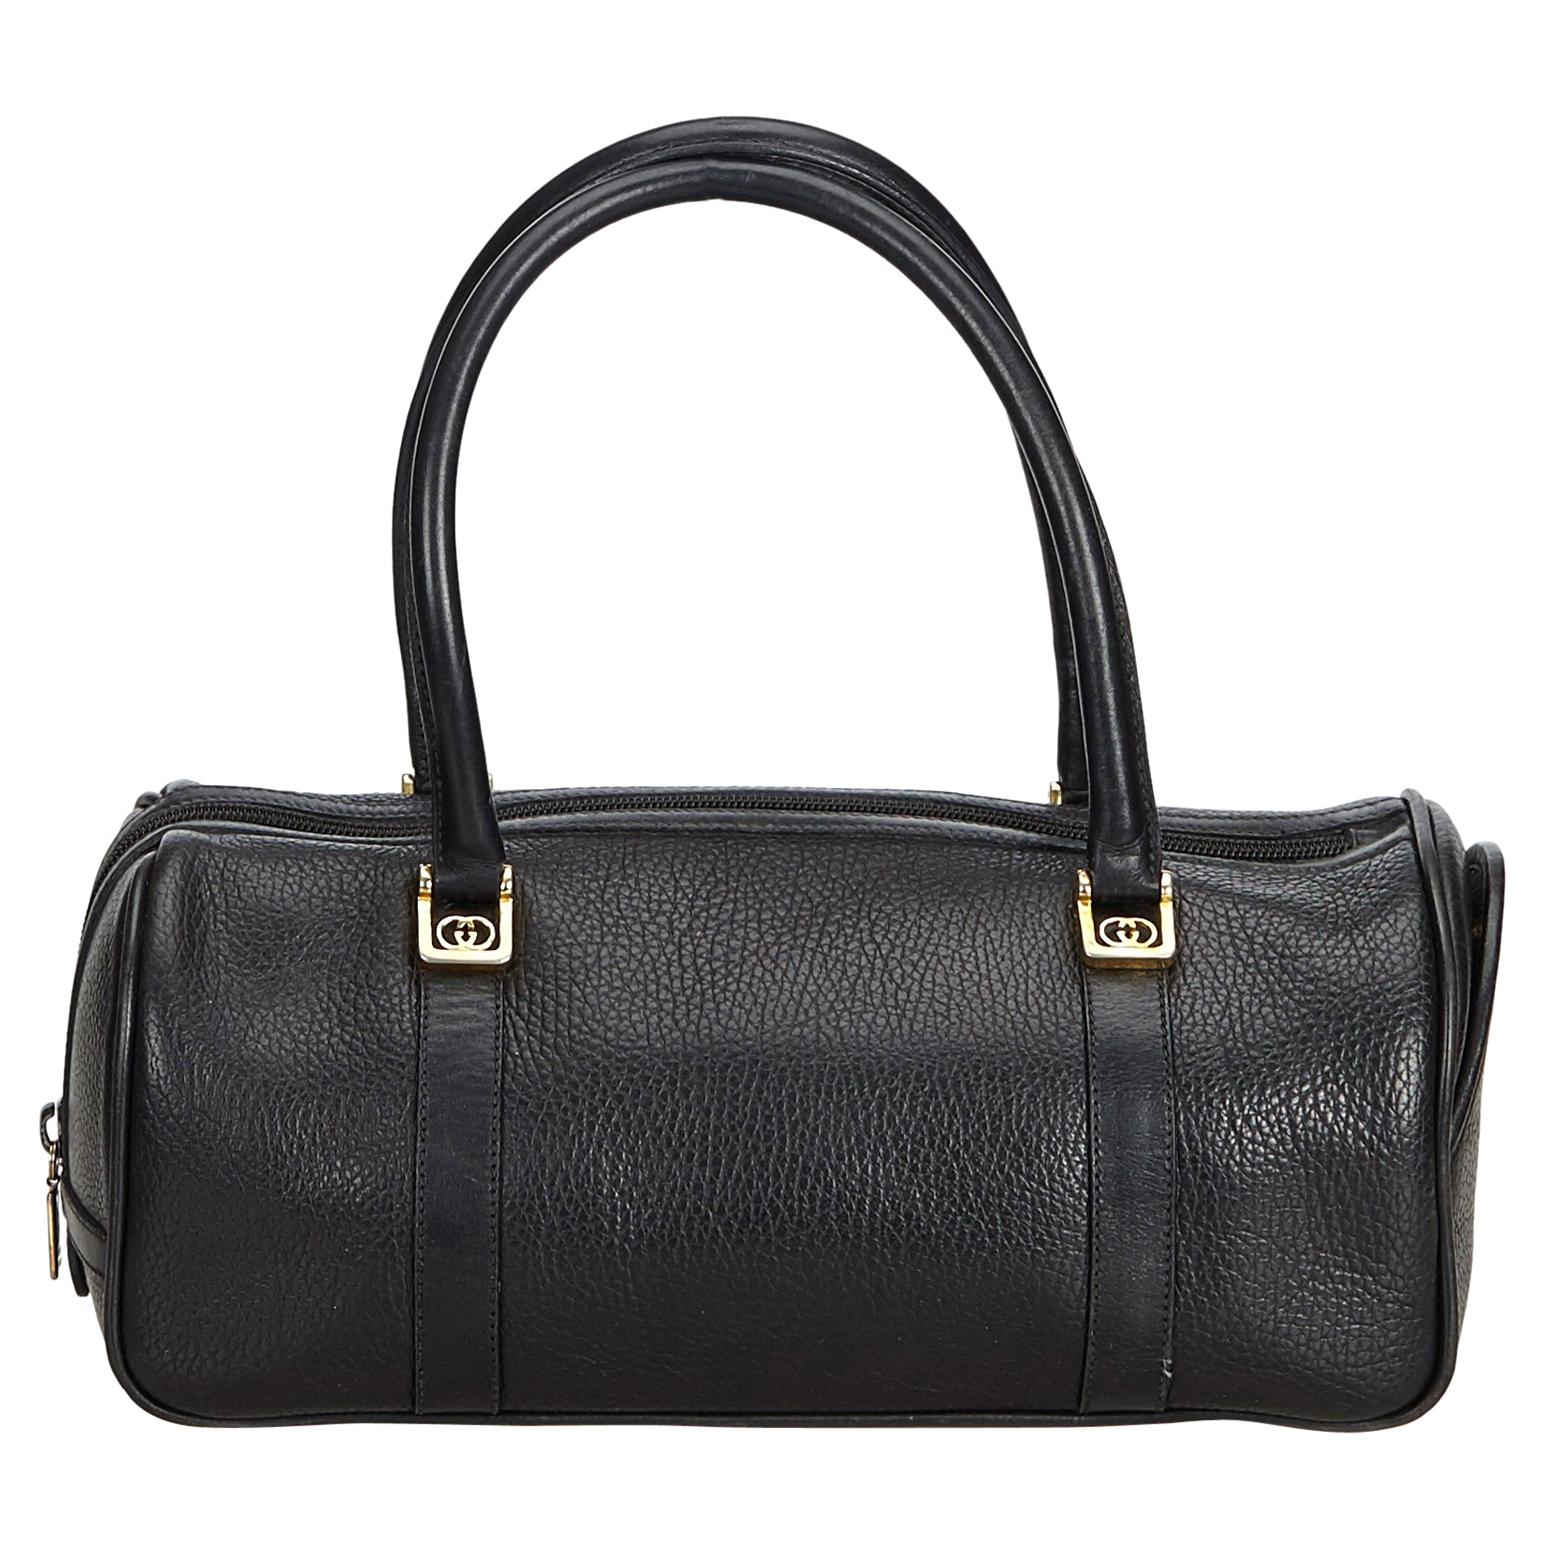 Gucci Black Leather Handbag For Sale